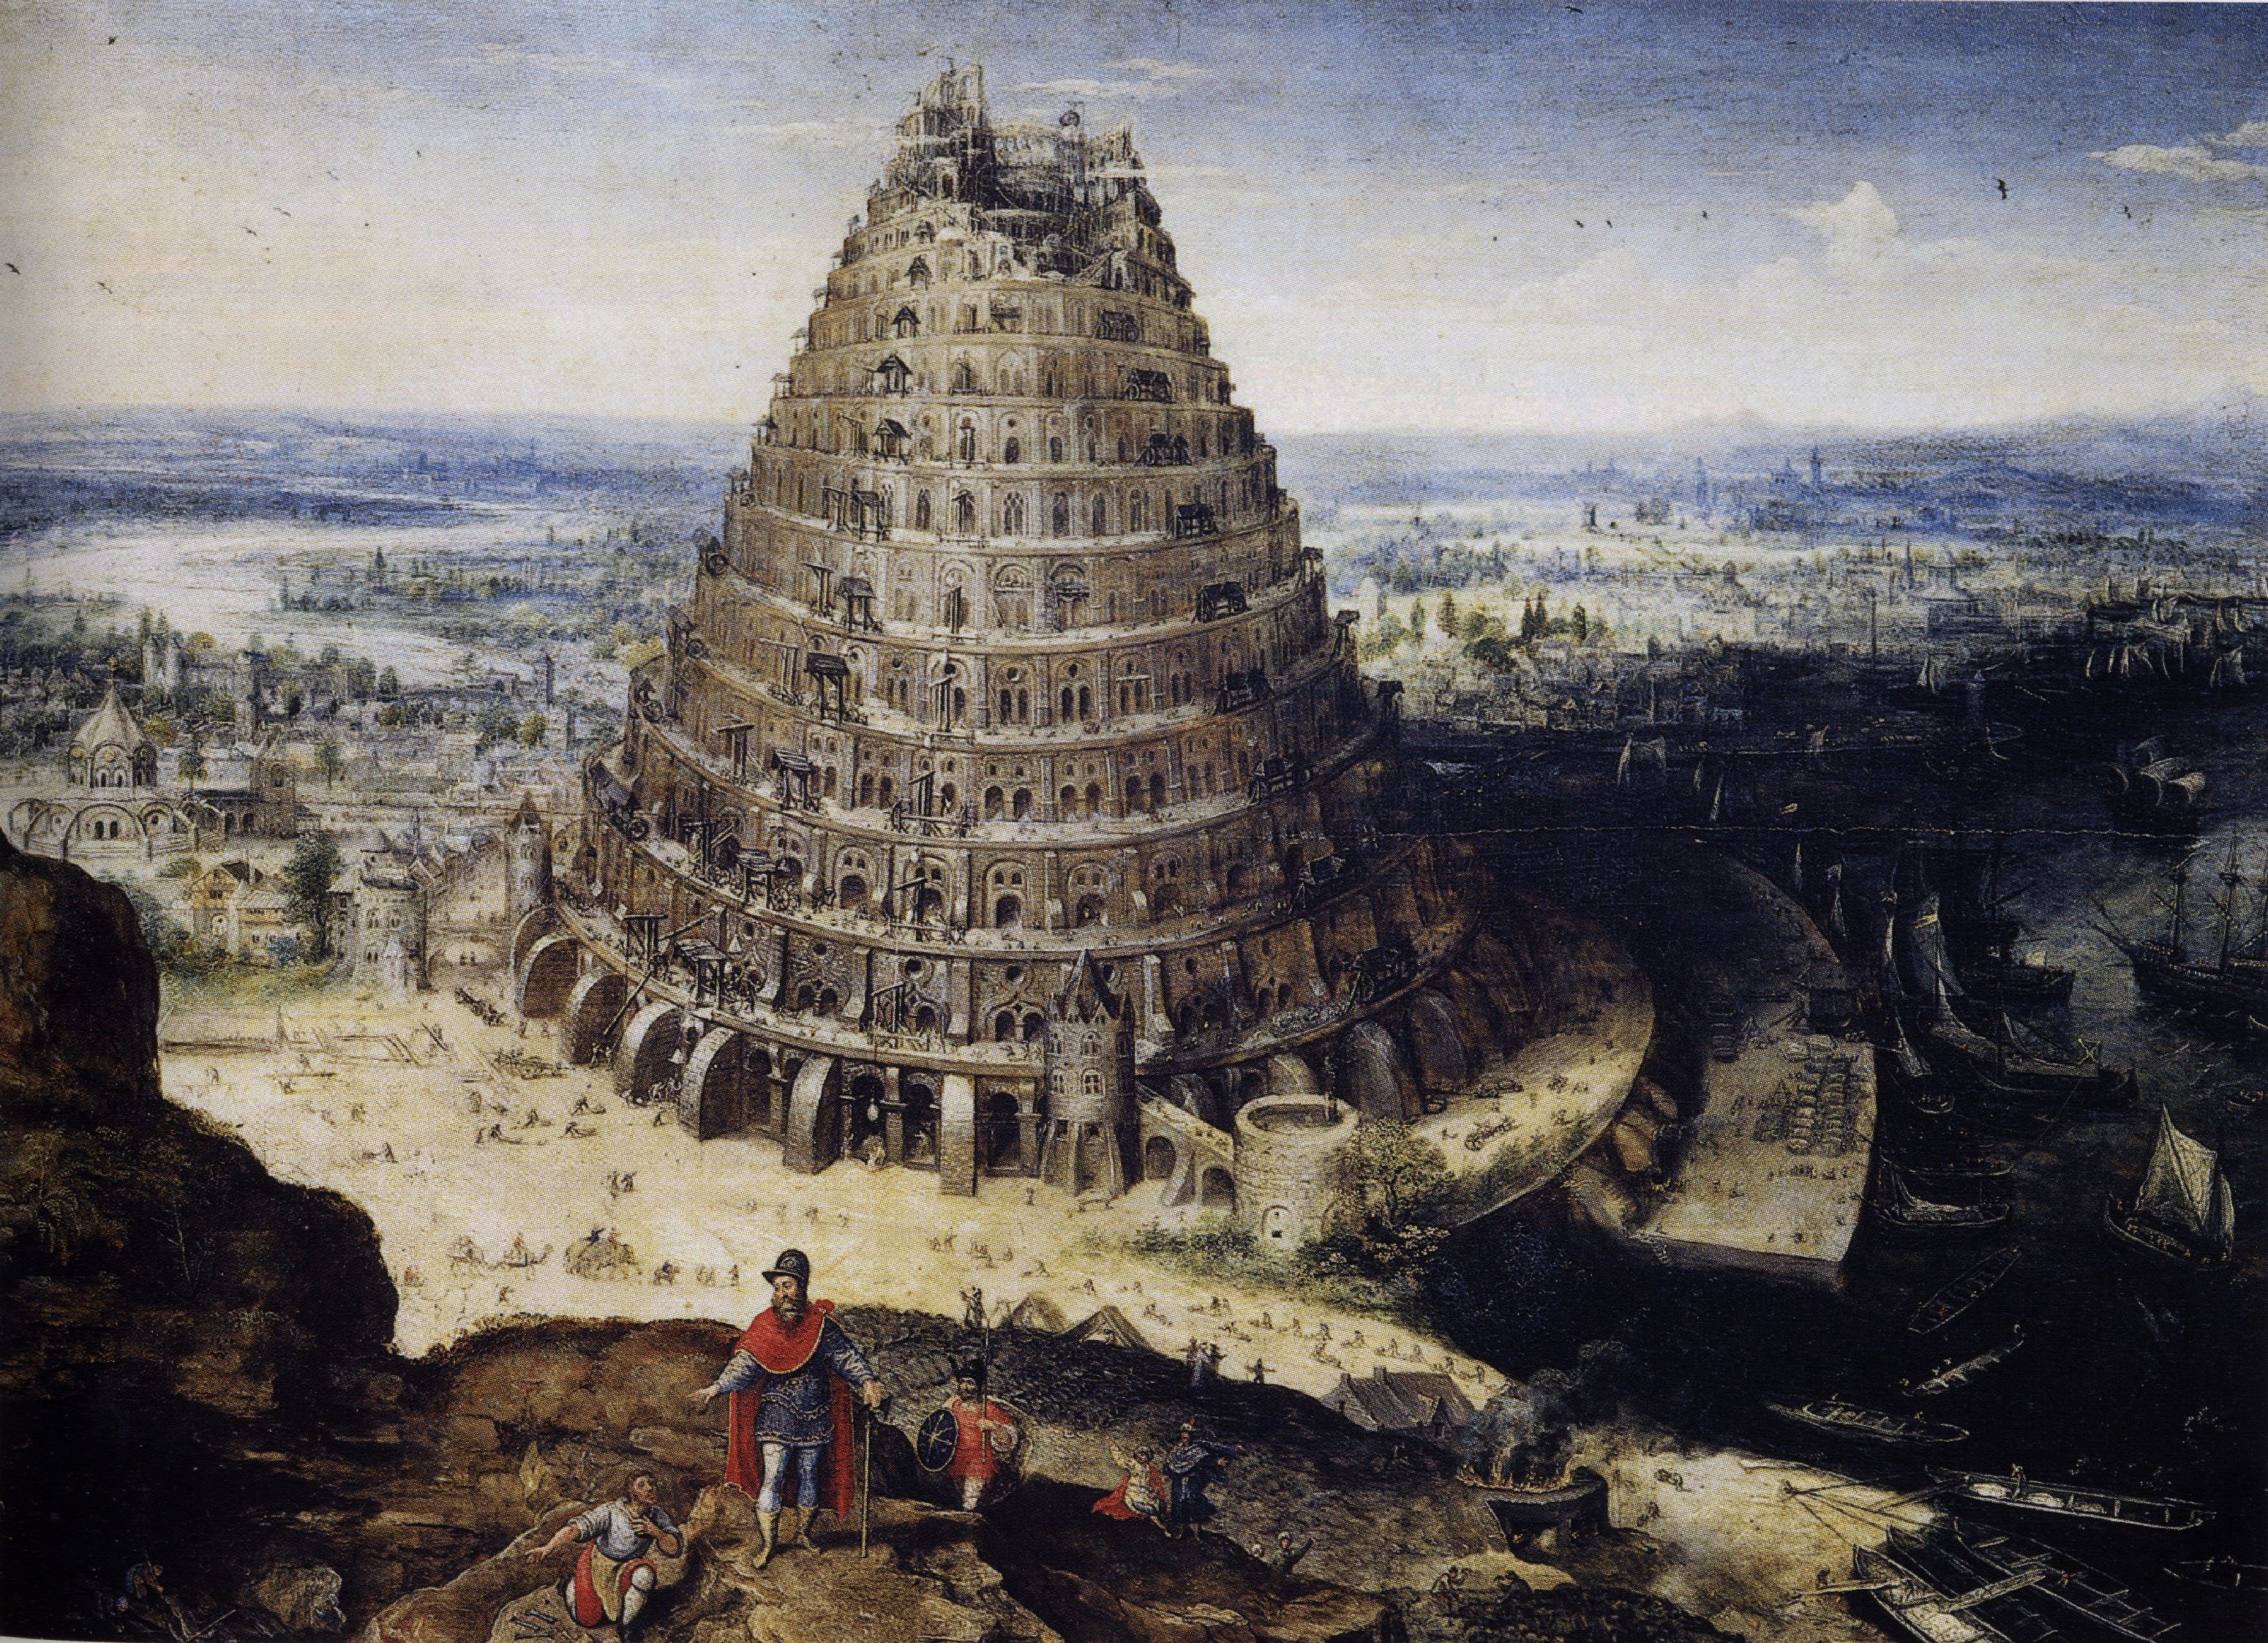 Tower of Babel by Lucas van Valckenborch in 1594